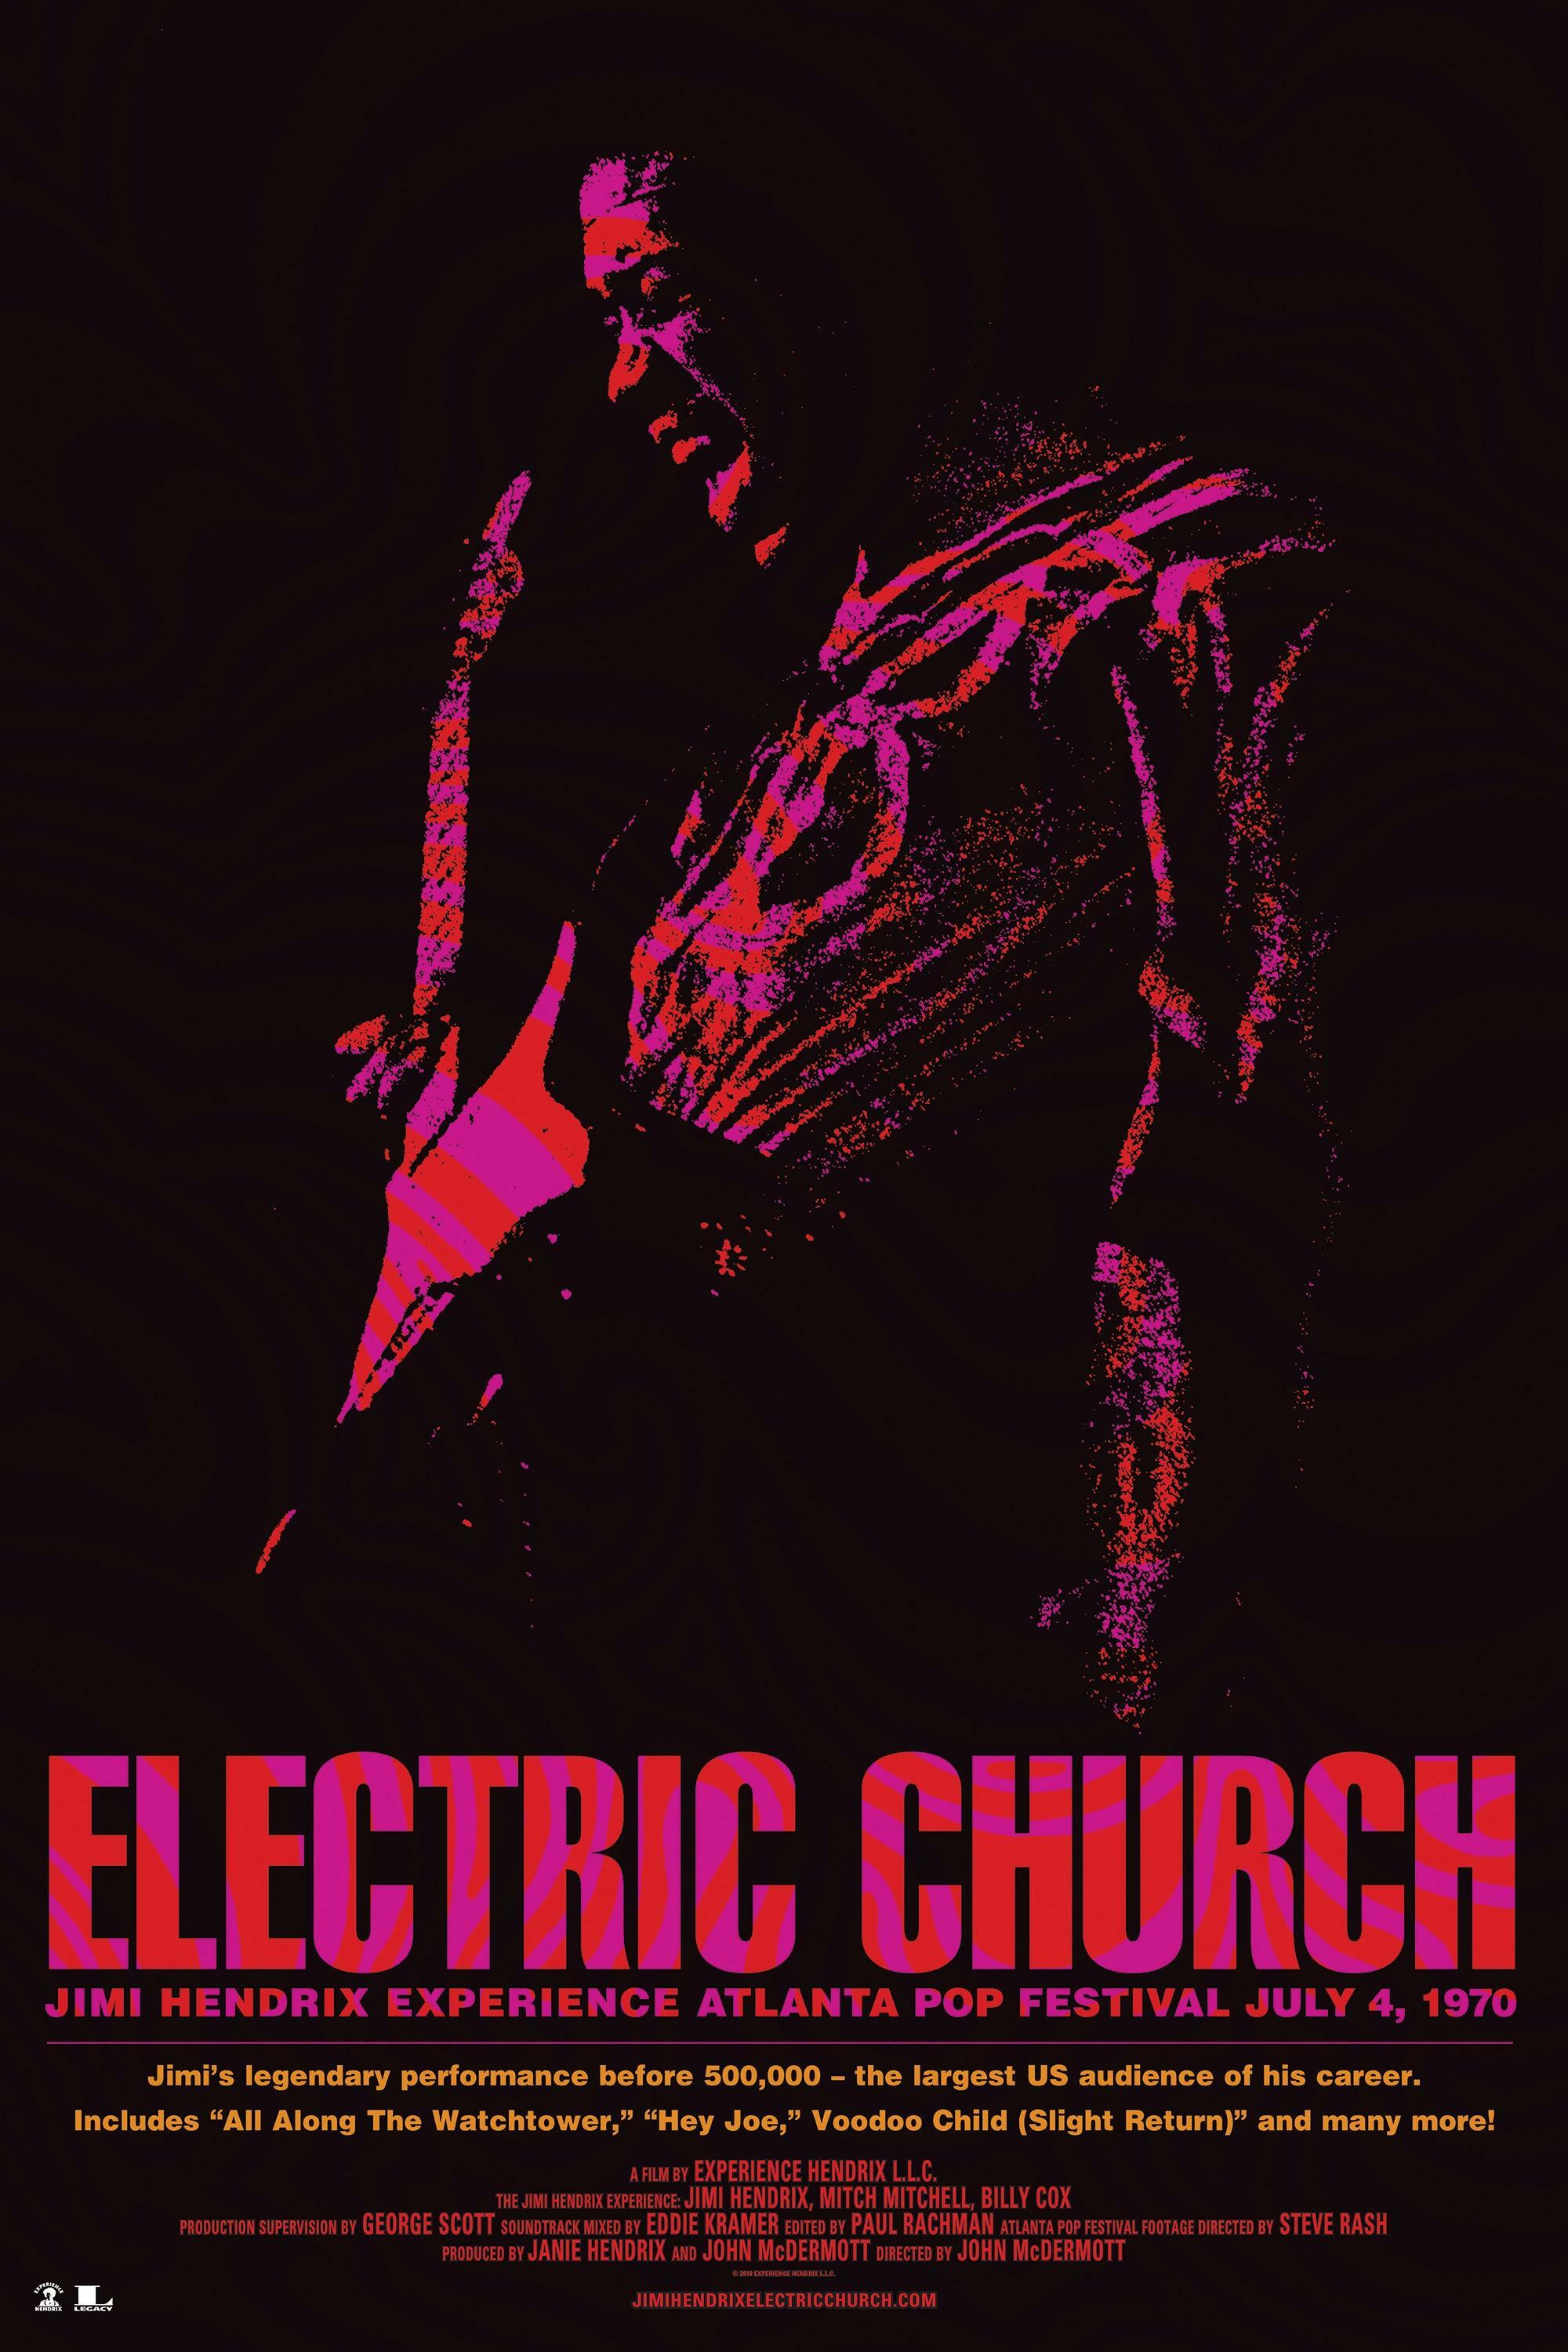 Jimi Hendrix Electric Church show poster